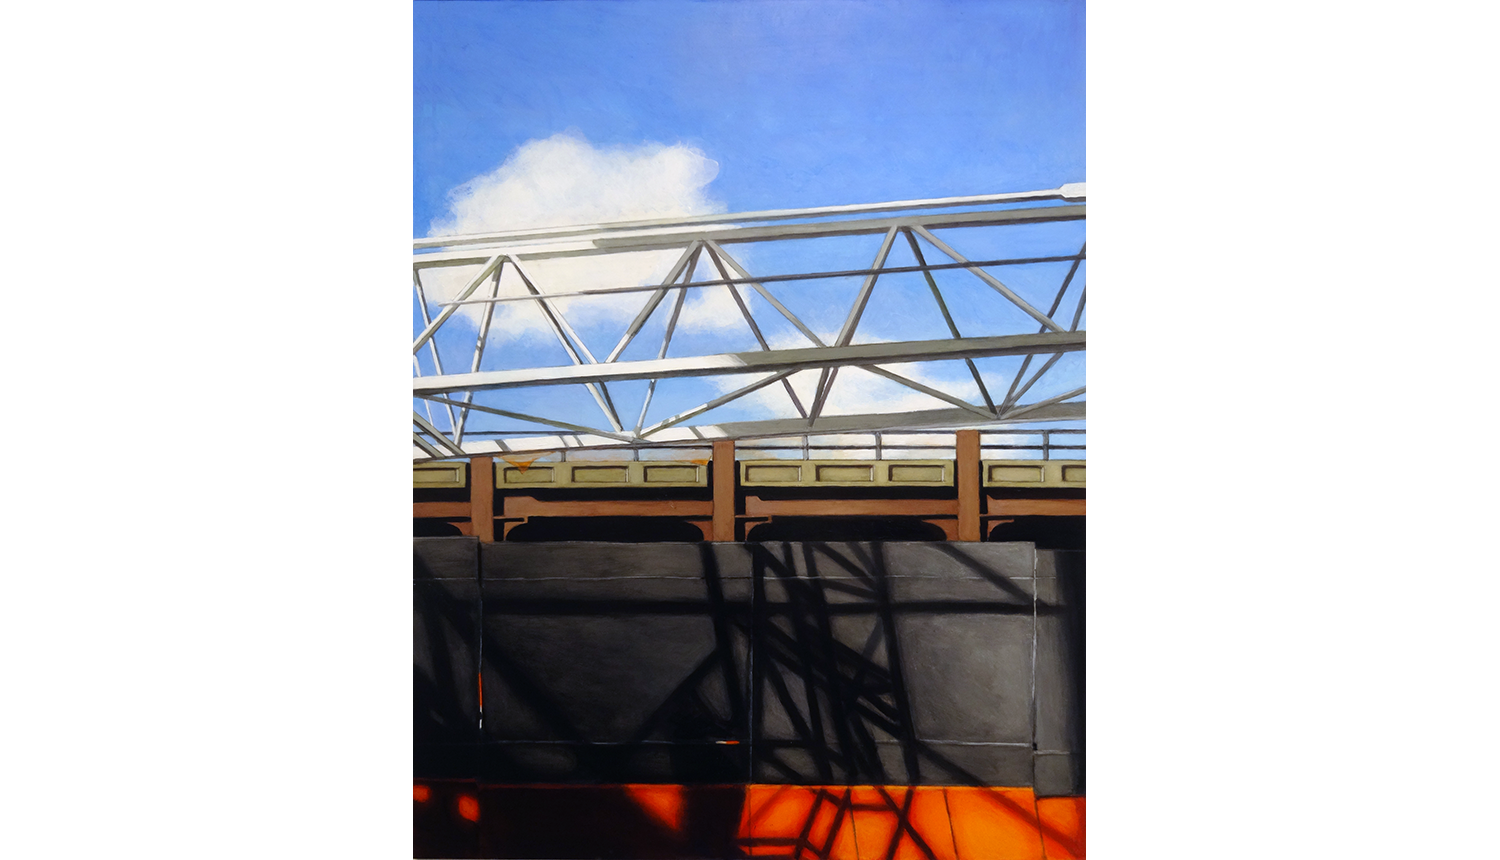   Hudson Yards 2, 2015, Acrylic on board, 18 x 24”  